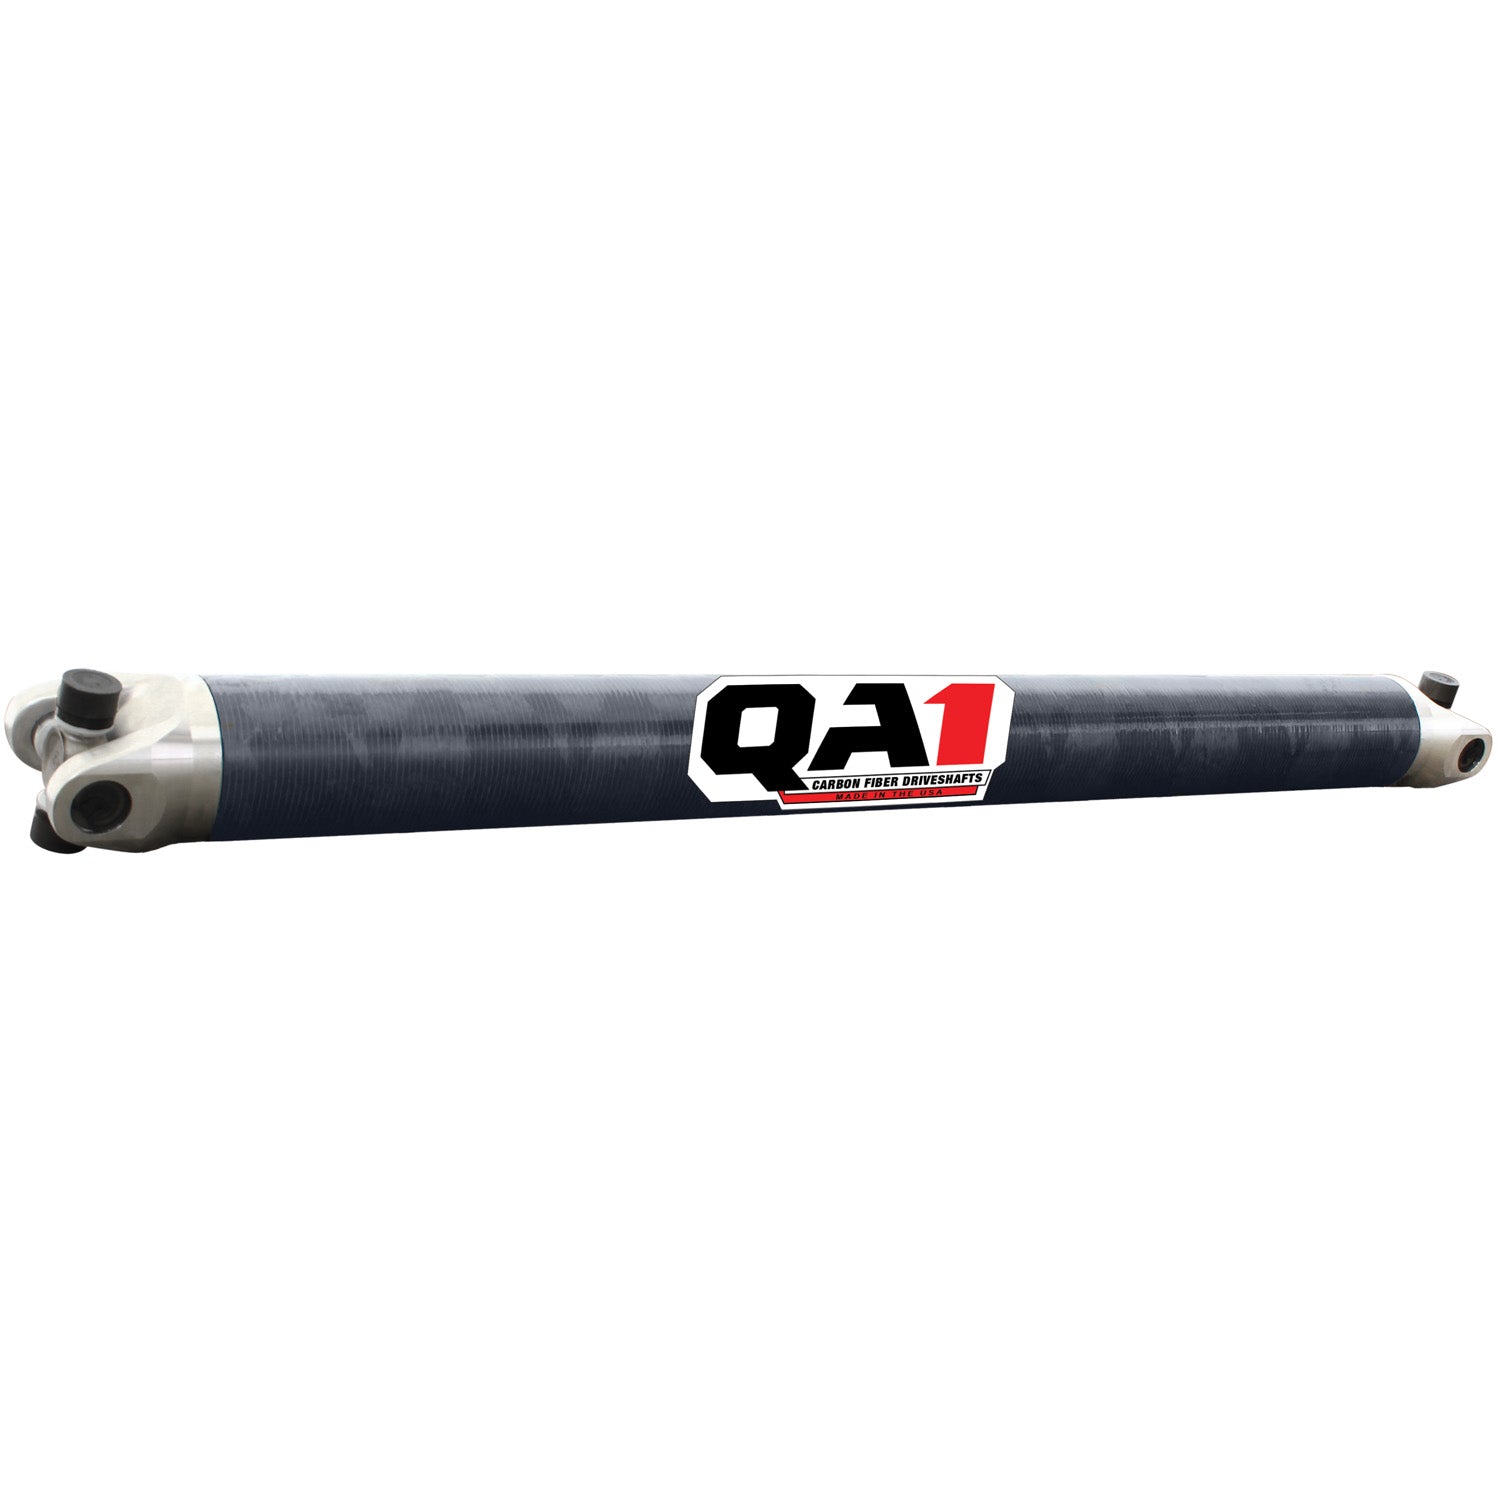 QA1 JJ-11231 Driveshaft, Cf, Ct-Dirt LM, 37.00 XM 3.2, 1310 U-Joint, 2600Lb.